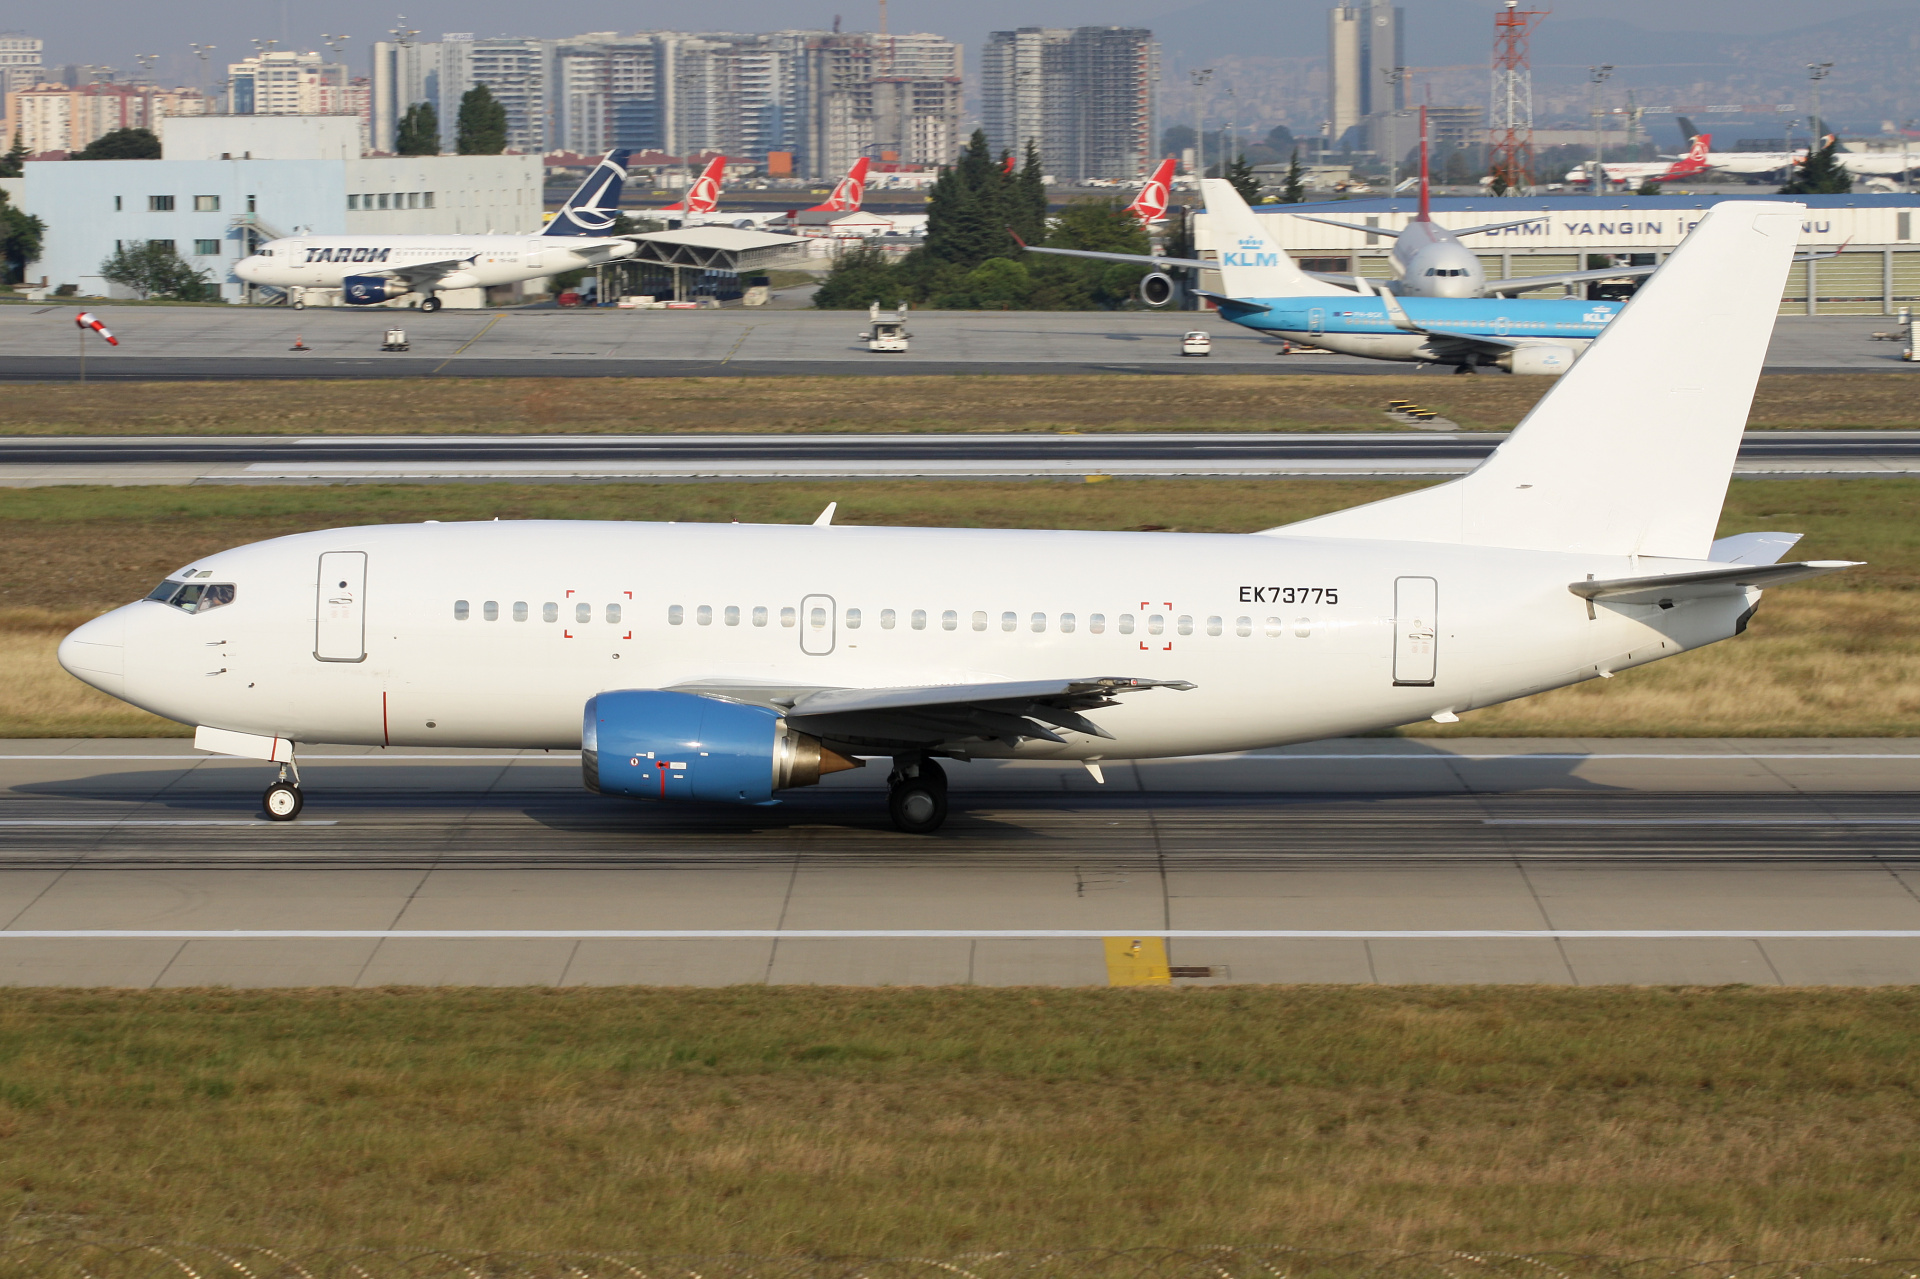 EK73775, Taron Avia (Aircraft » Istanbul Atatürk Airport » Boeing 737-500)